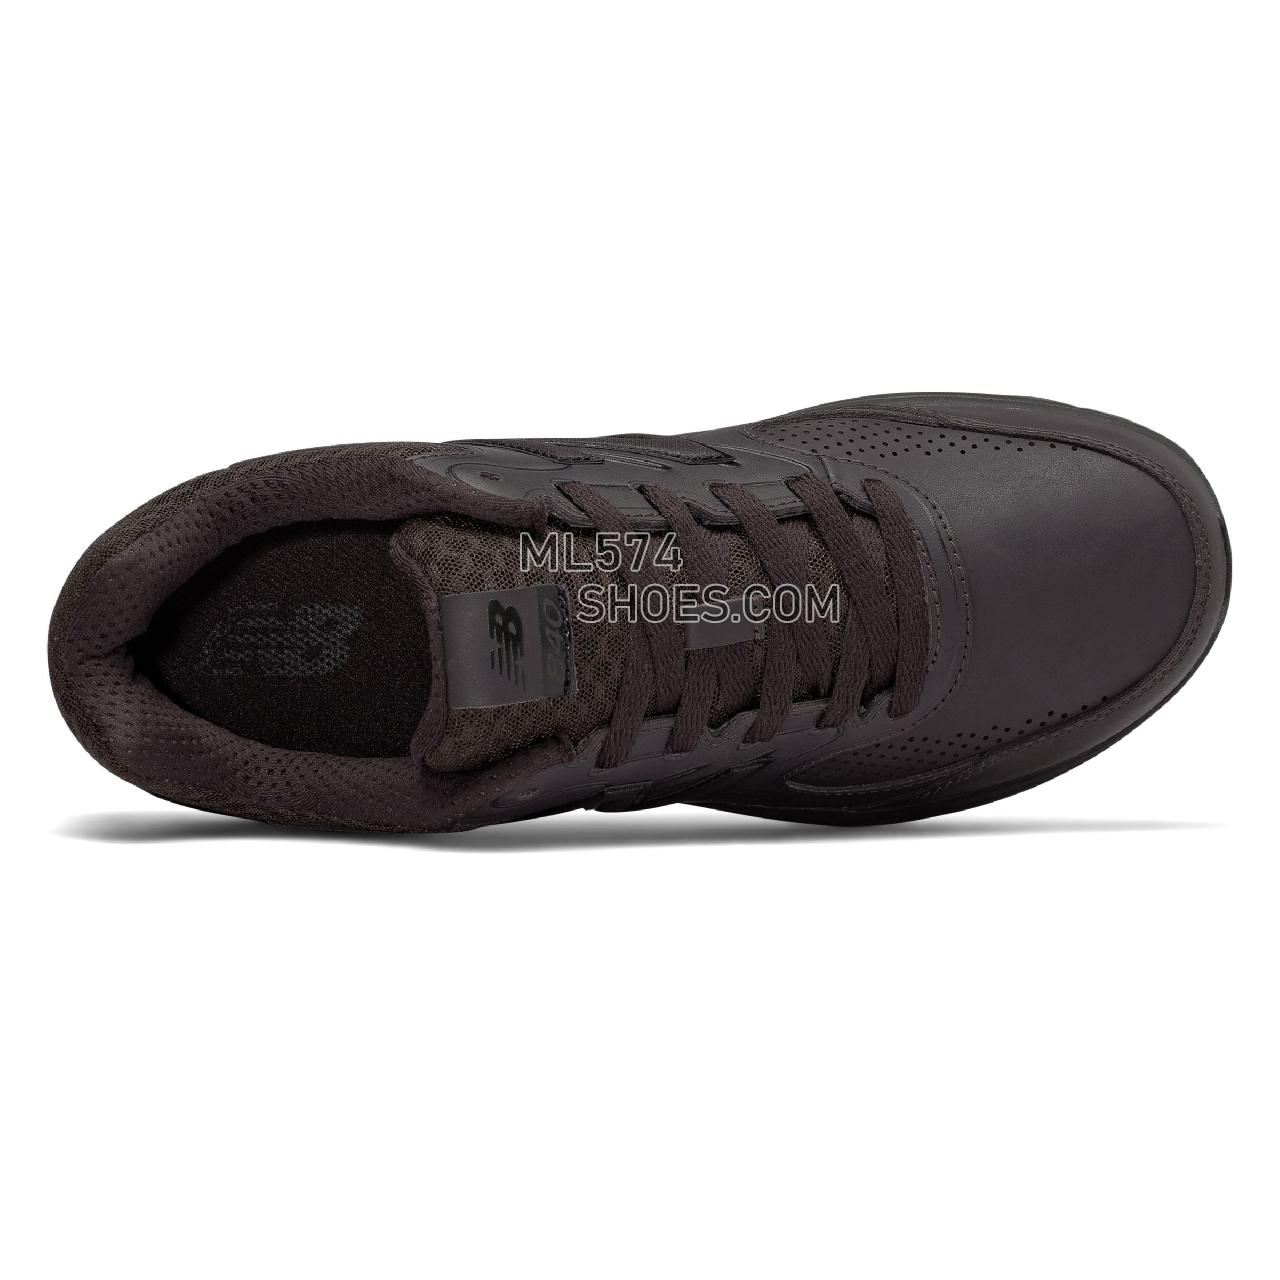 New Balance Leather 840v2 - Men's 840 - Walking Brown - MW840BR2